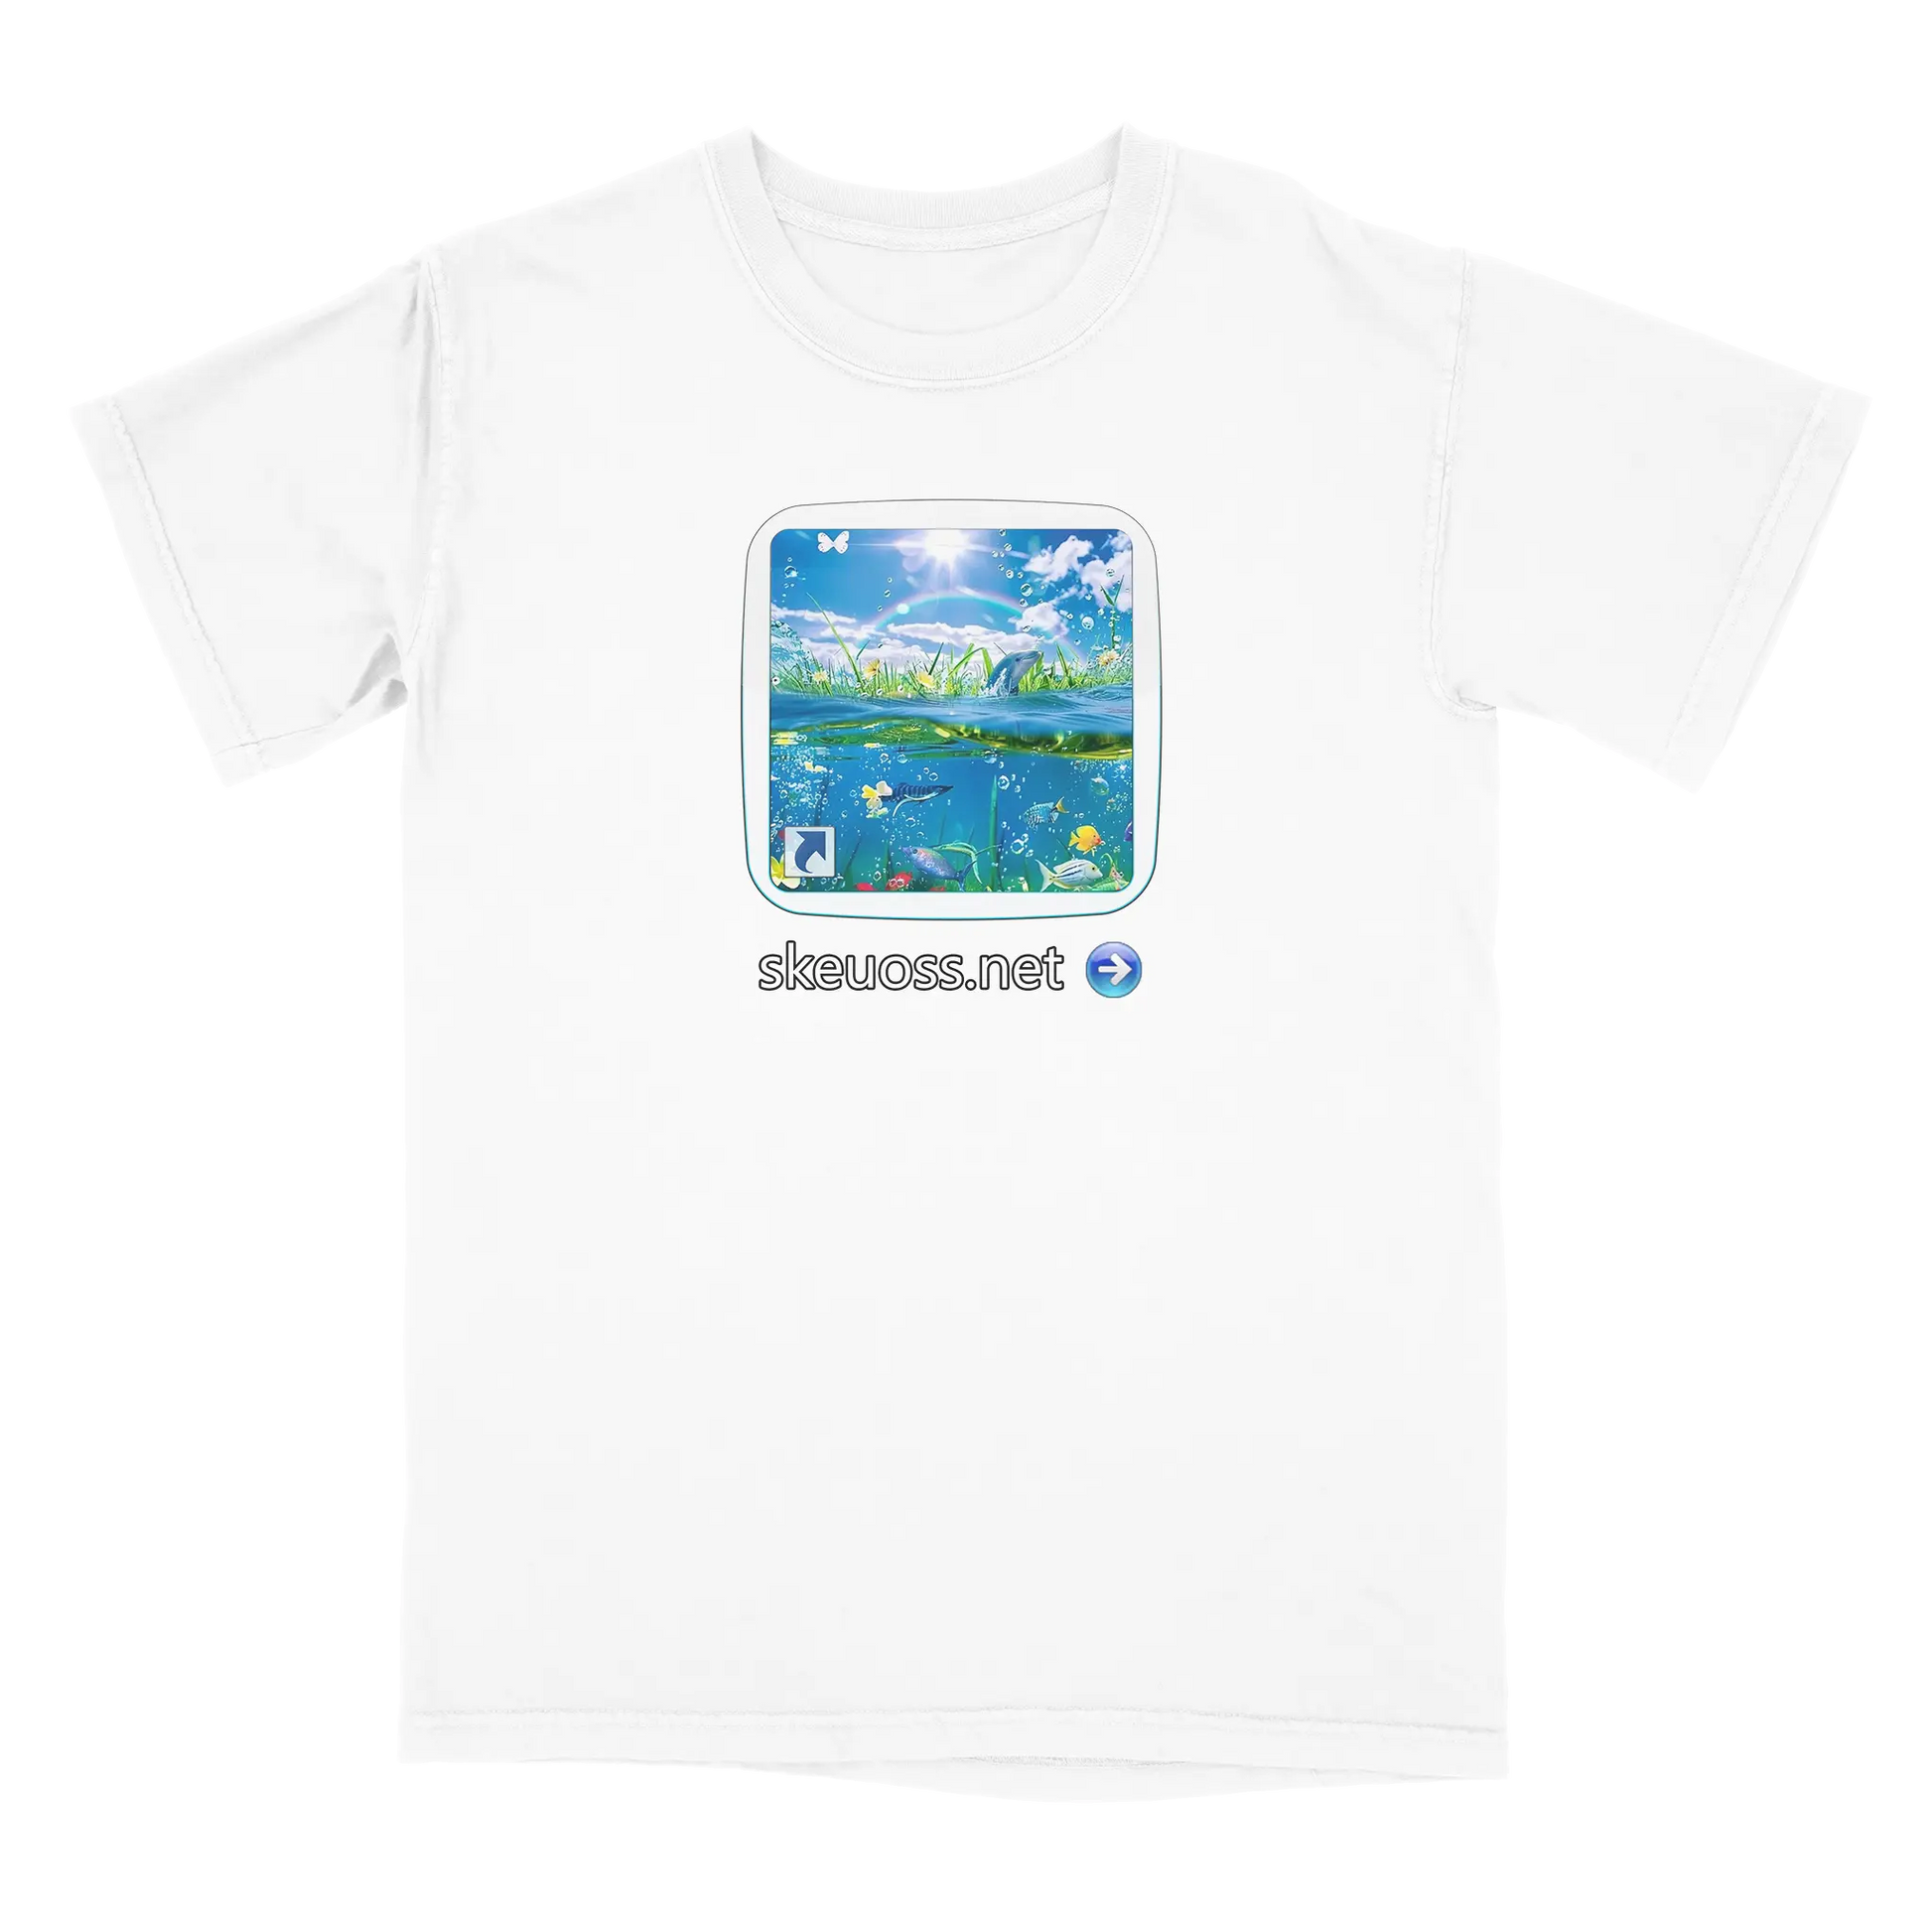 Frutiger Aero T-shirt - User Login Collection - User 198